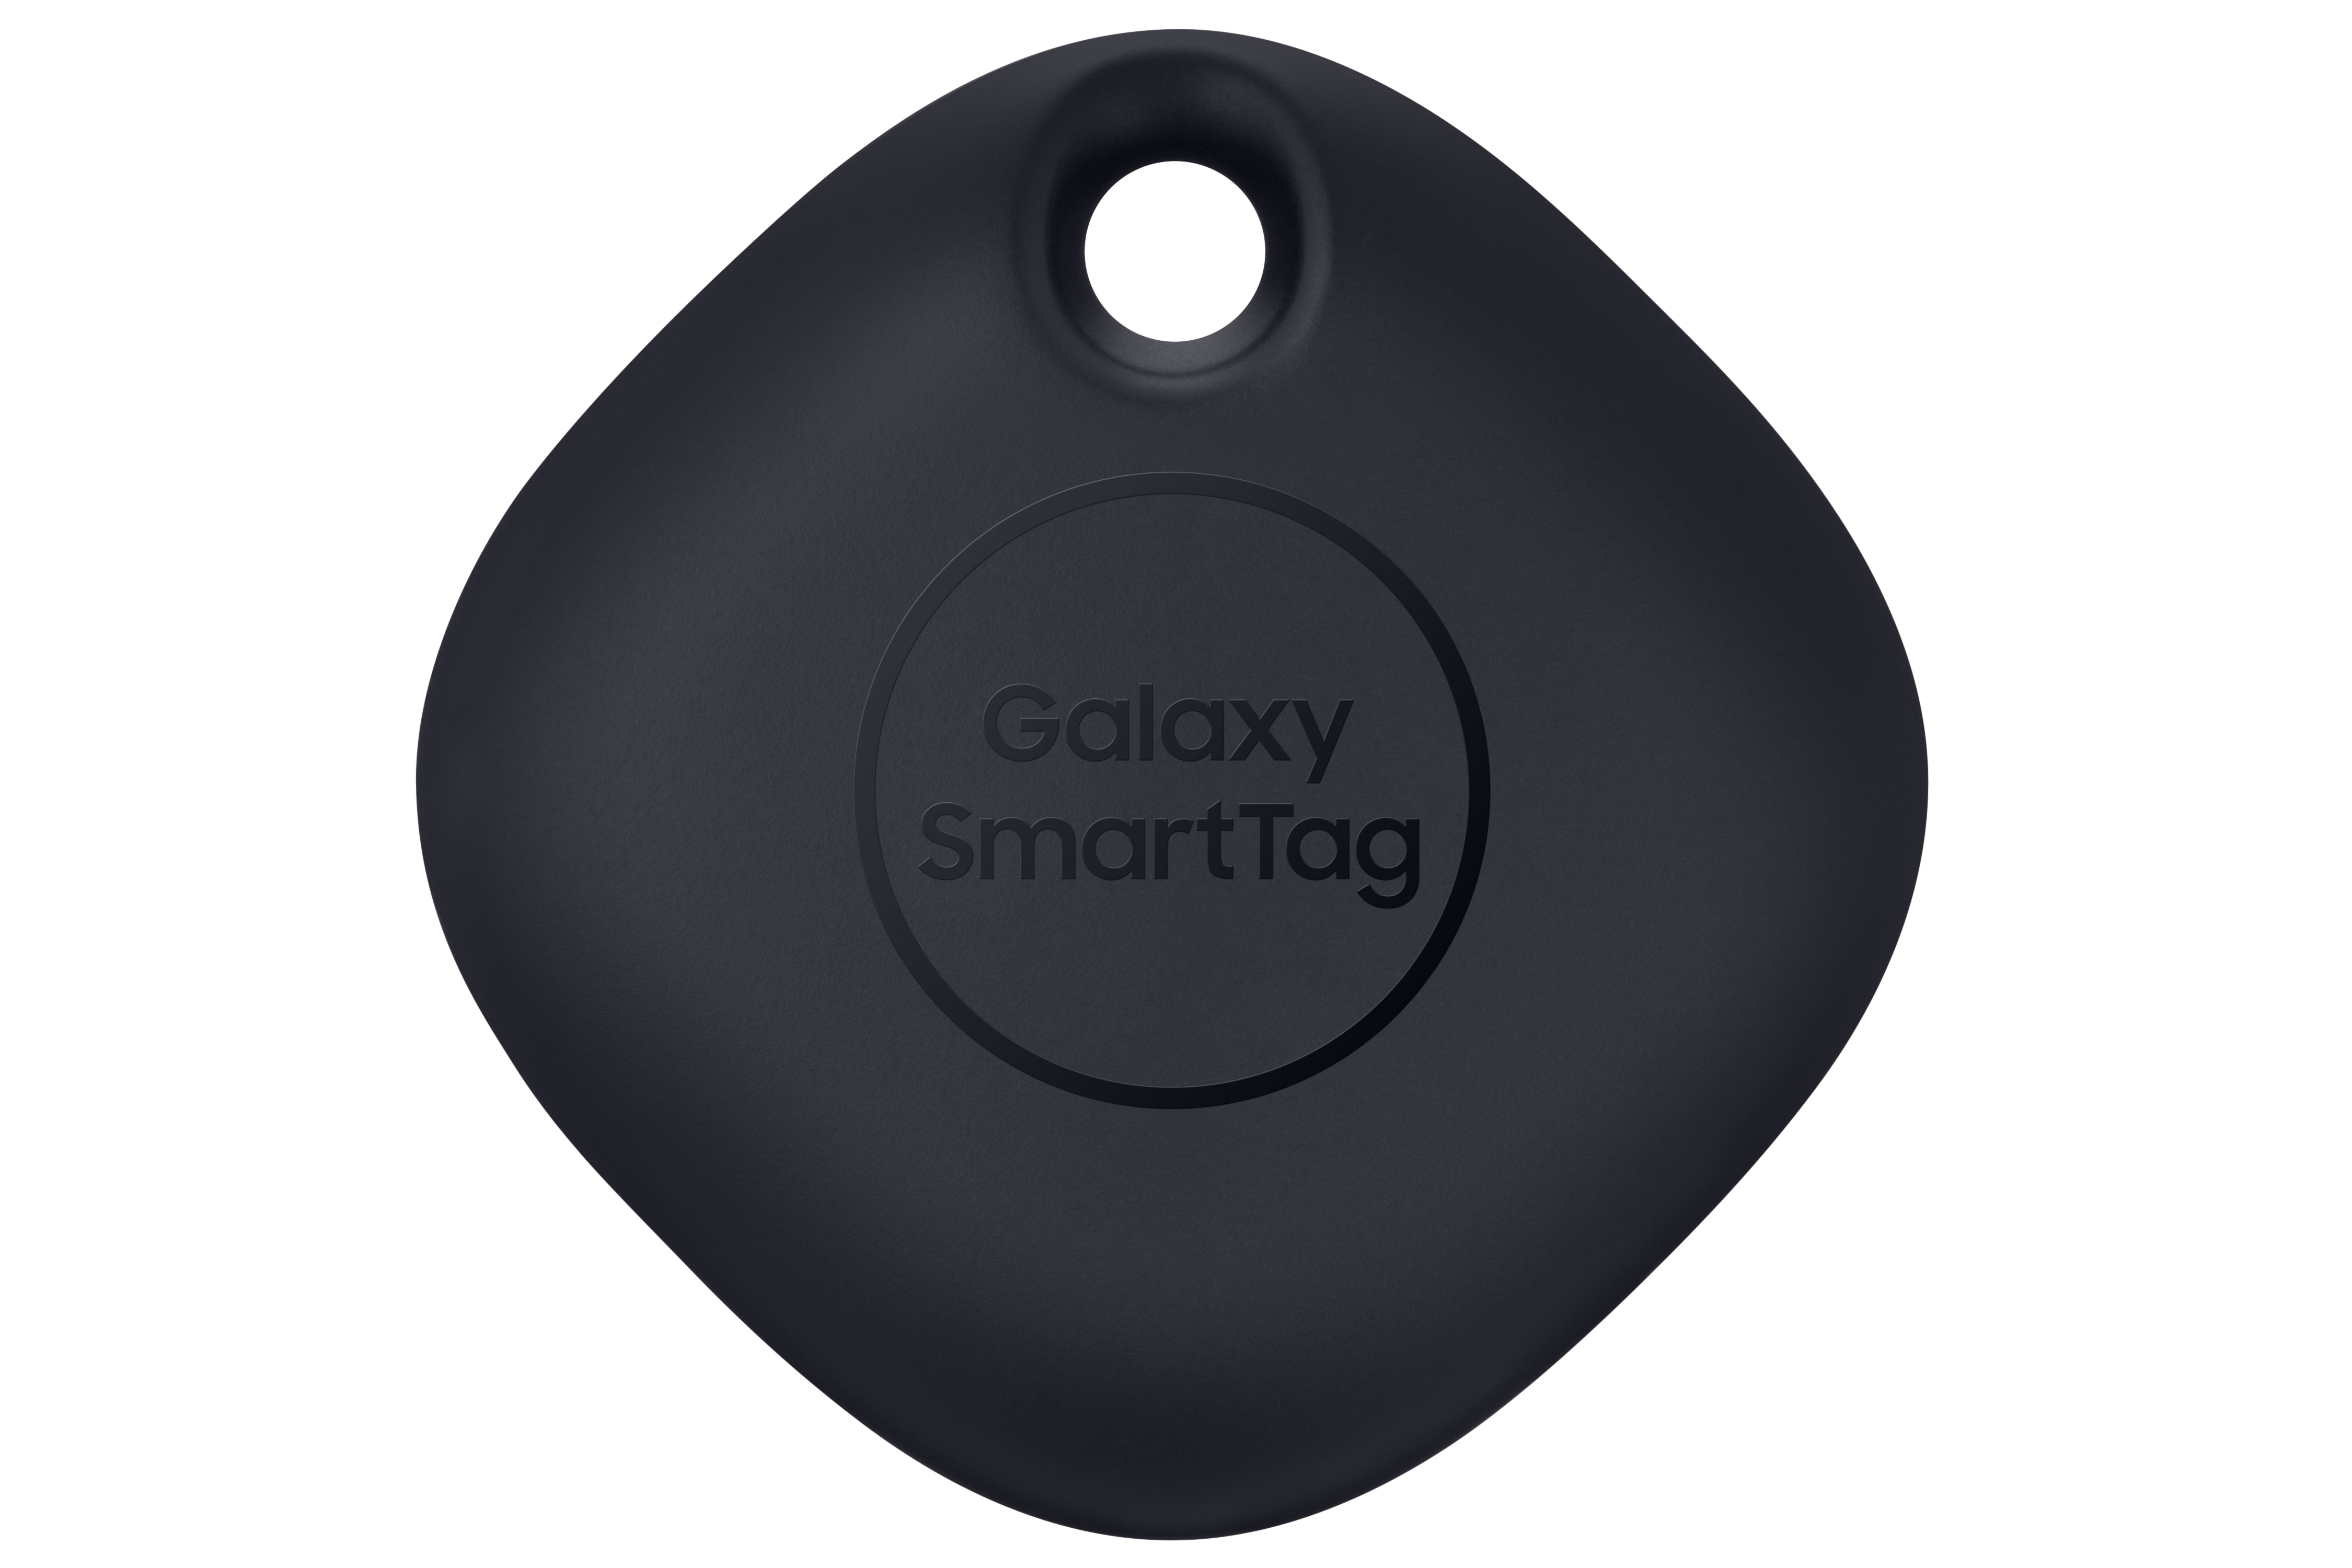 Samsung Galaxy Smarttag 1 Pack Black Mobile Accessories Ei T5300bbegus Samsung Us